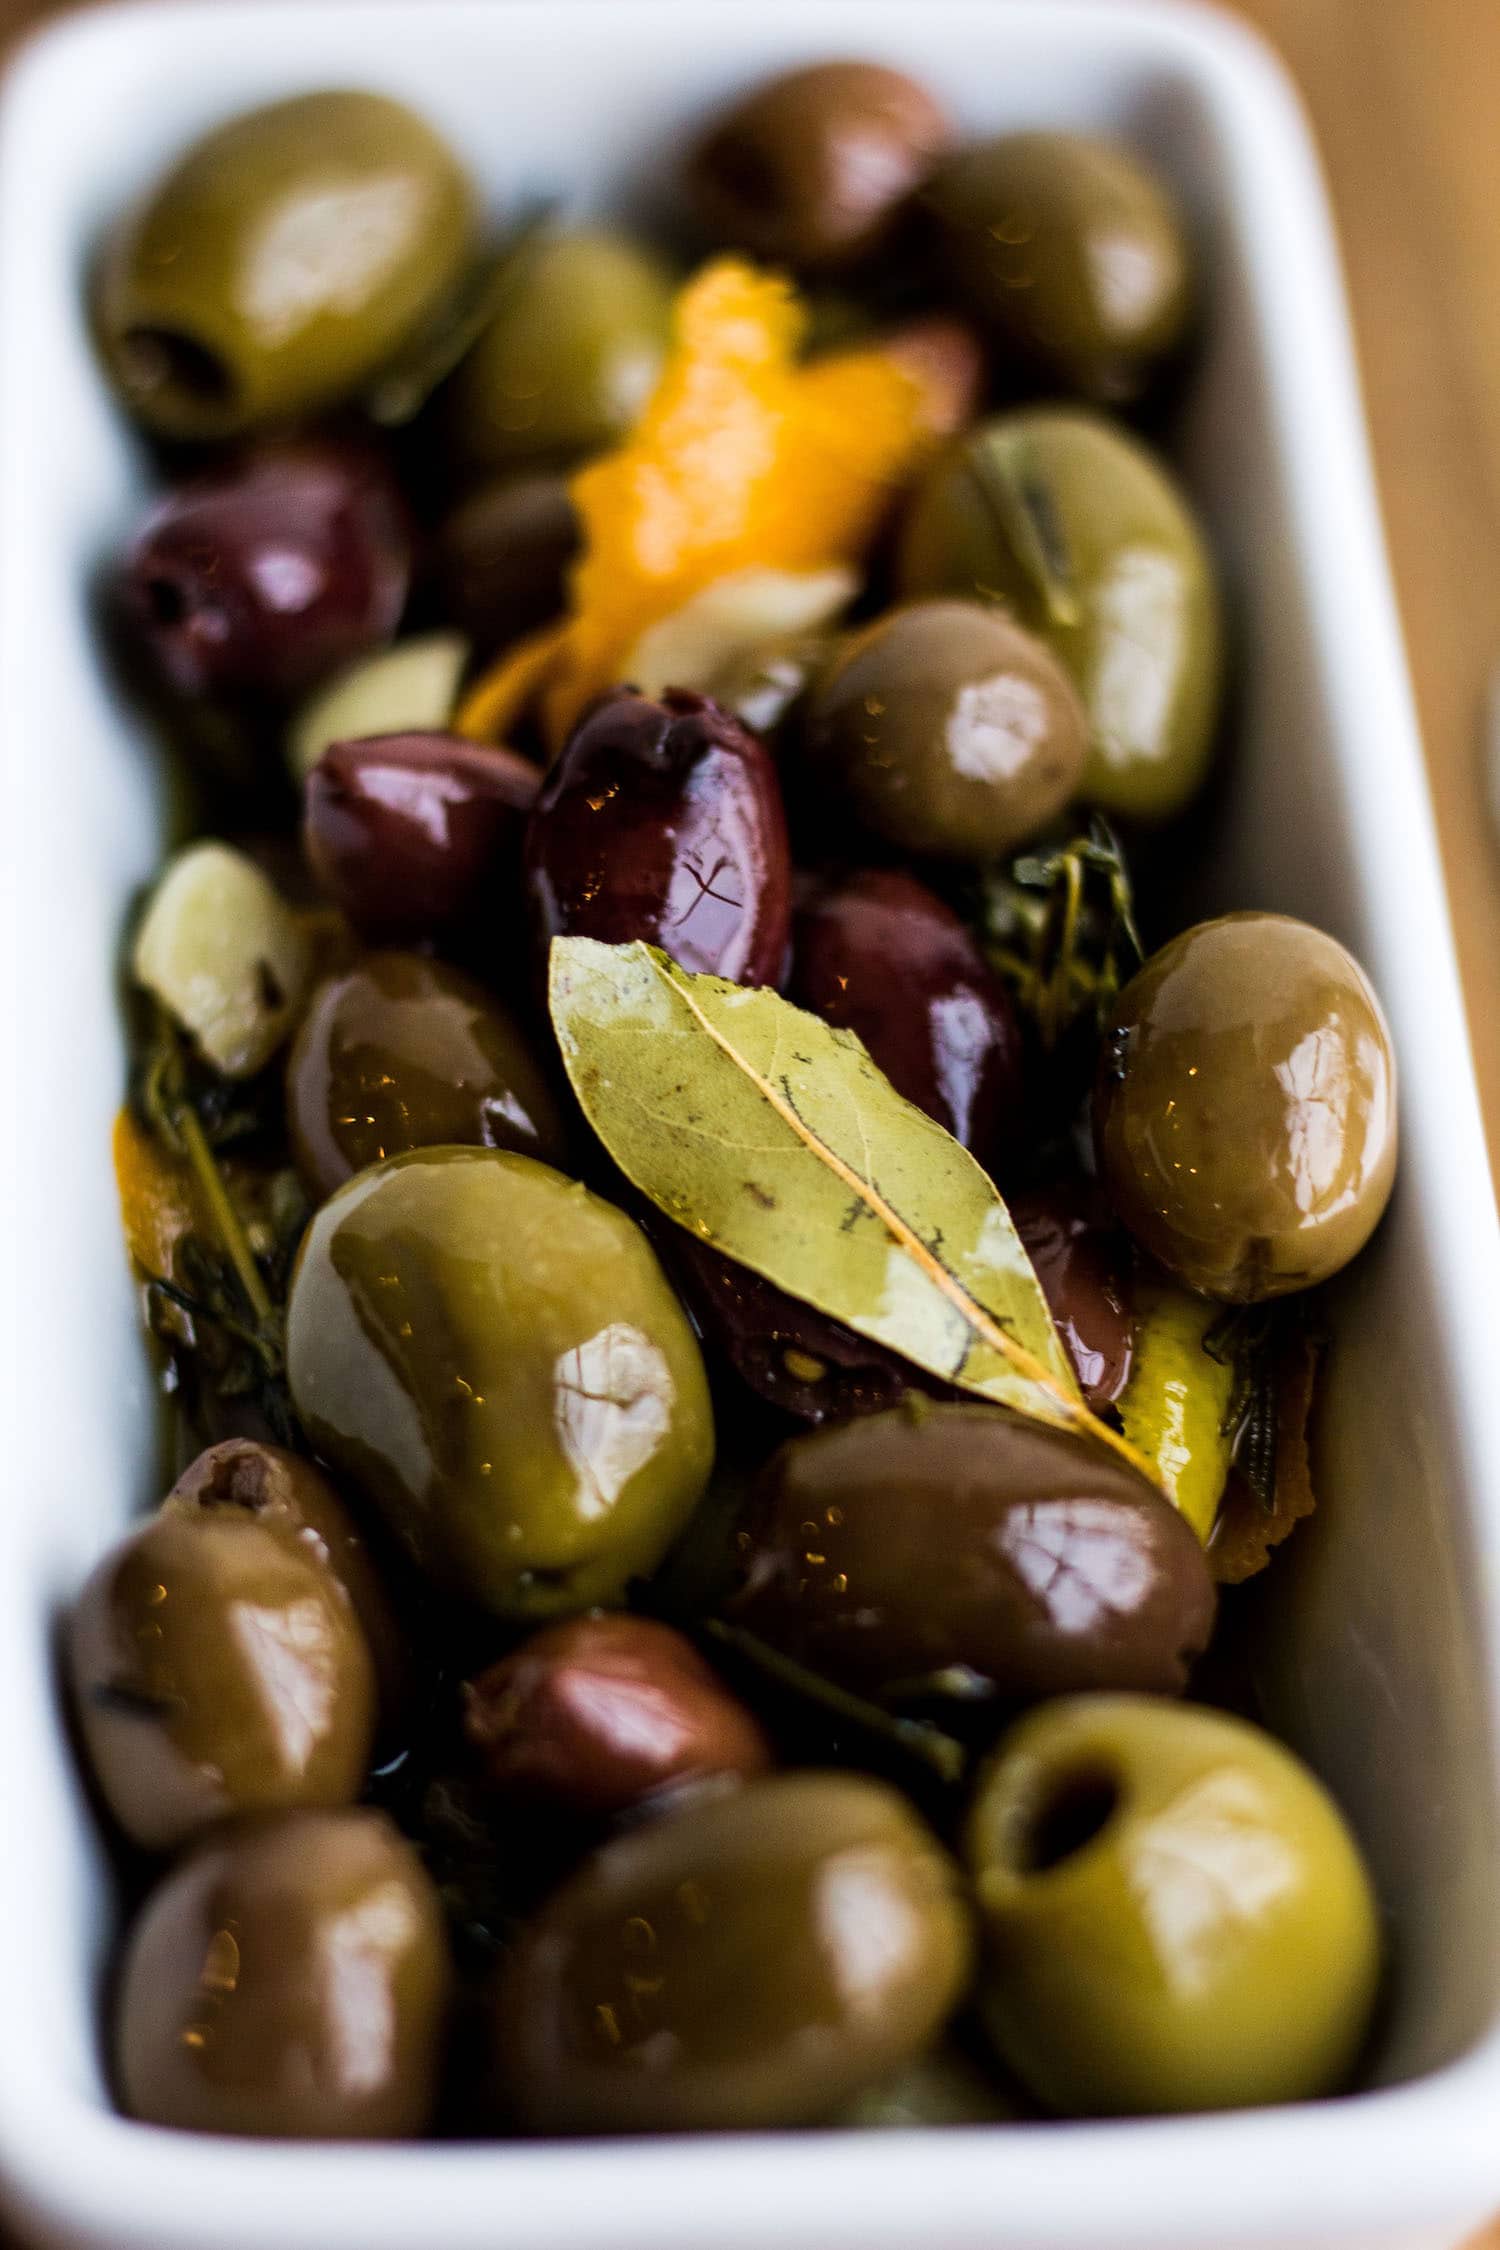 Marinated Olives - So Happy You Liked It